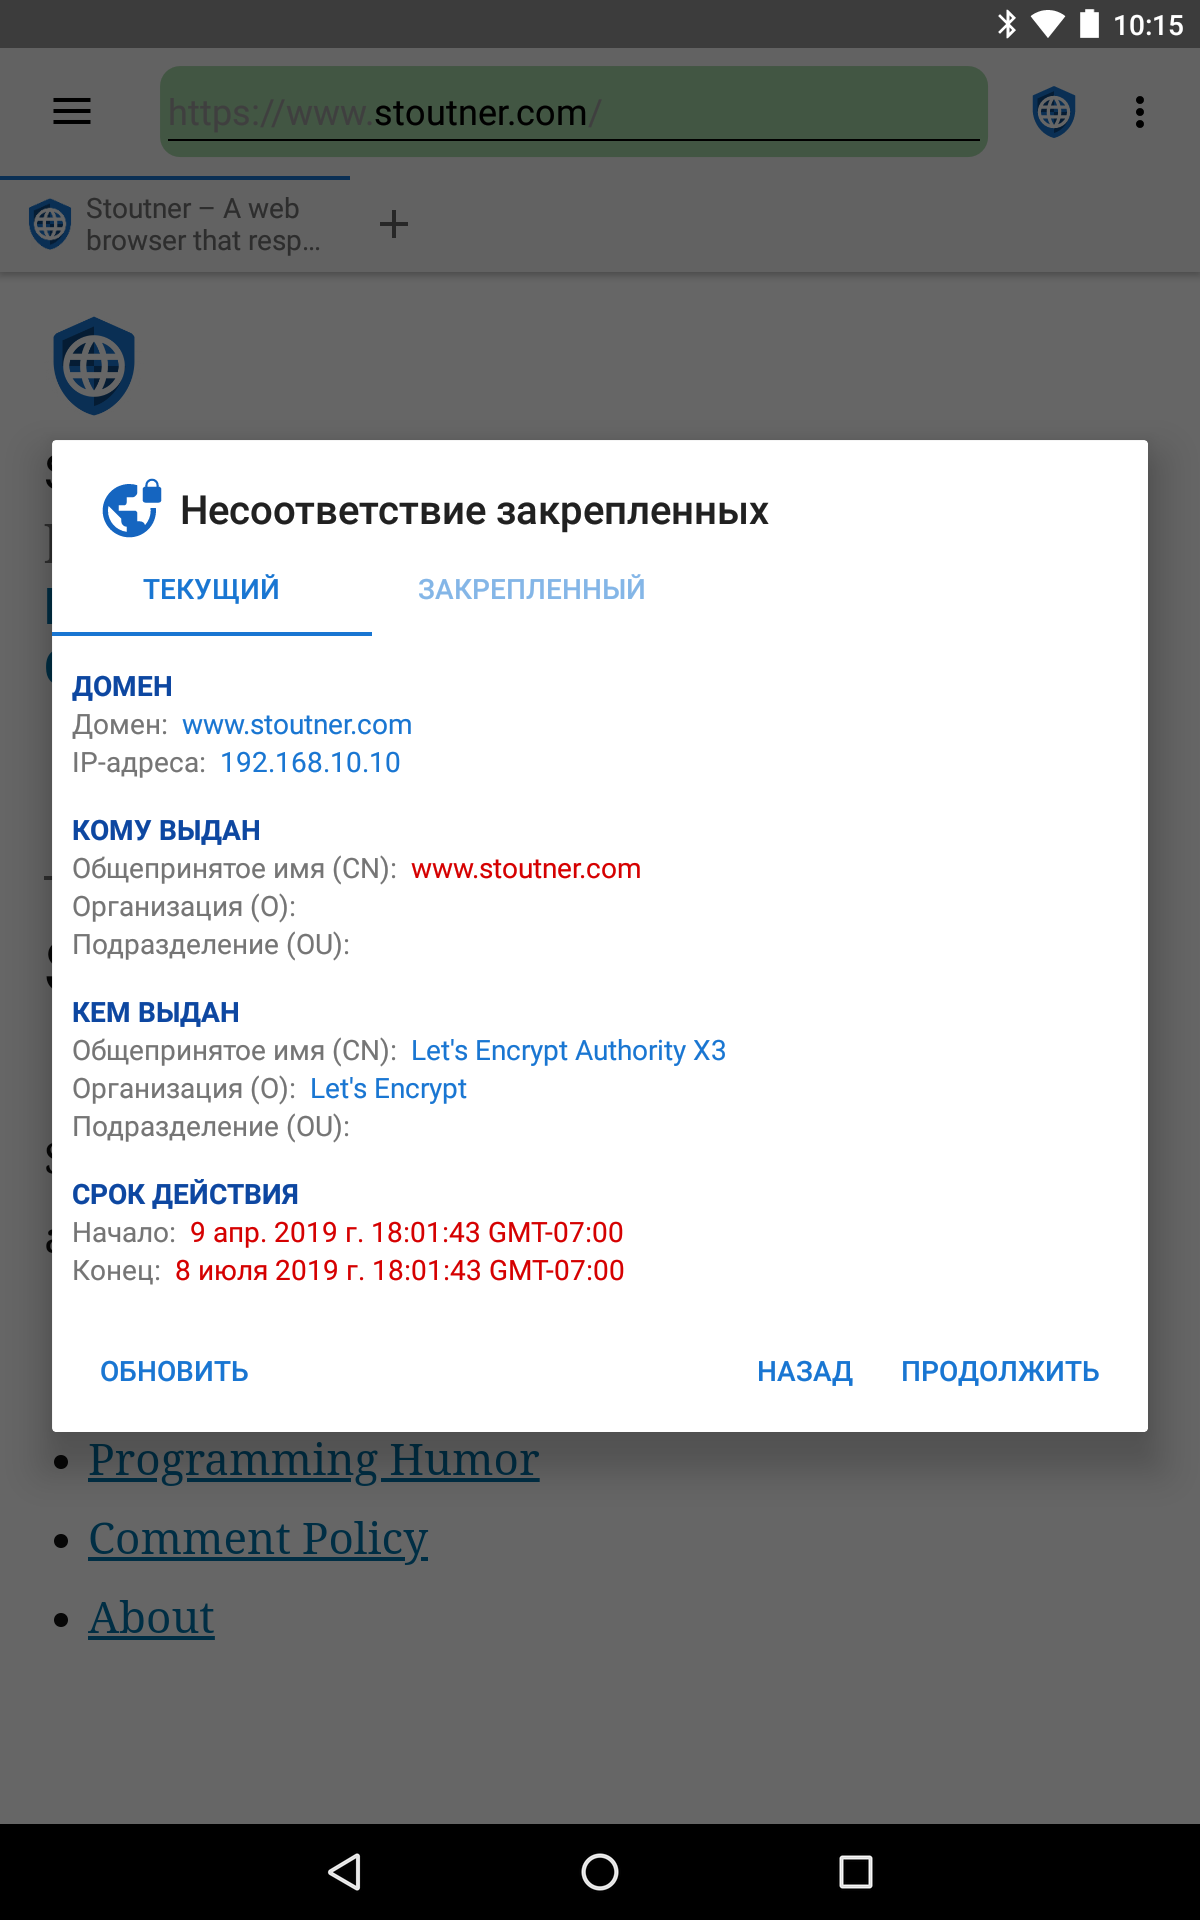 fastlane/metadata/android/ru-RU/images/sevenInchScreenshots/01-PinnedMismatch.png